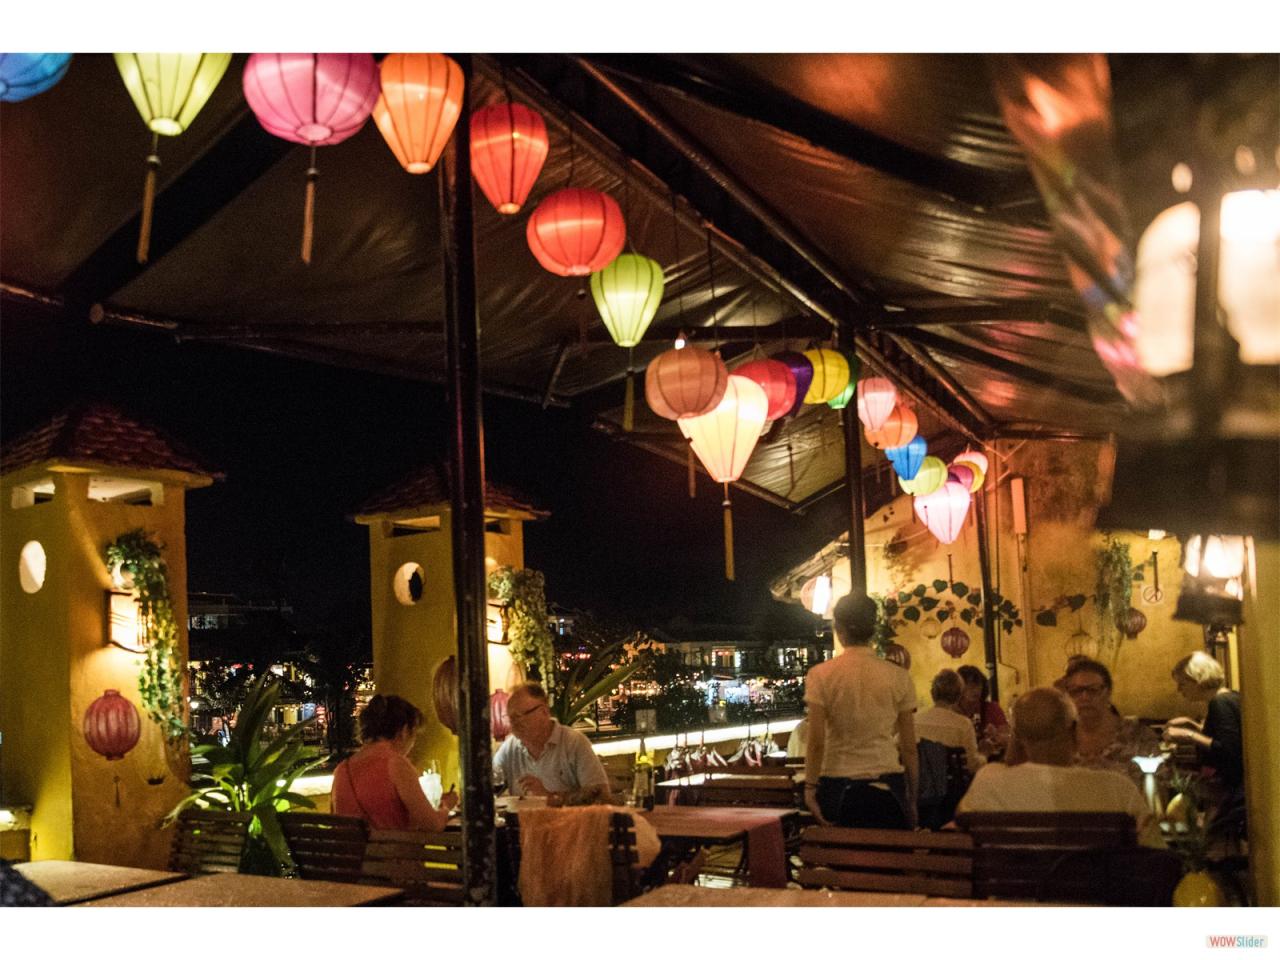 Cargo Club Cafe & Restaurant - Hoi An | Taste Vietnam